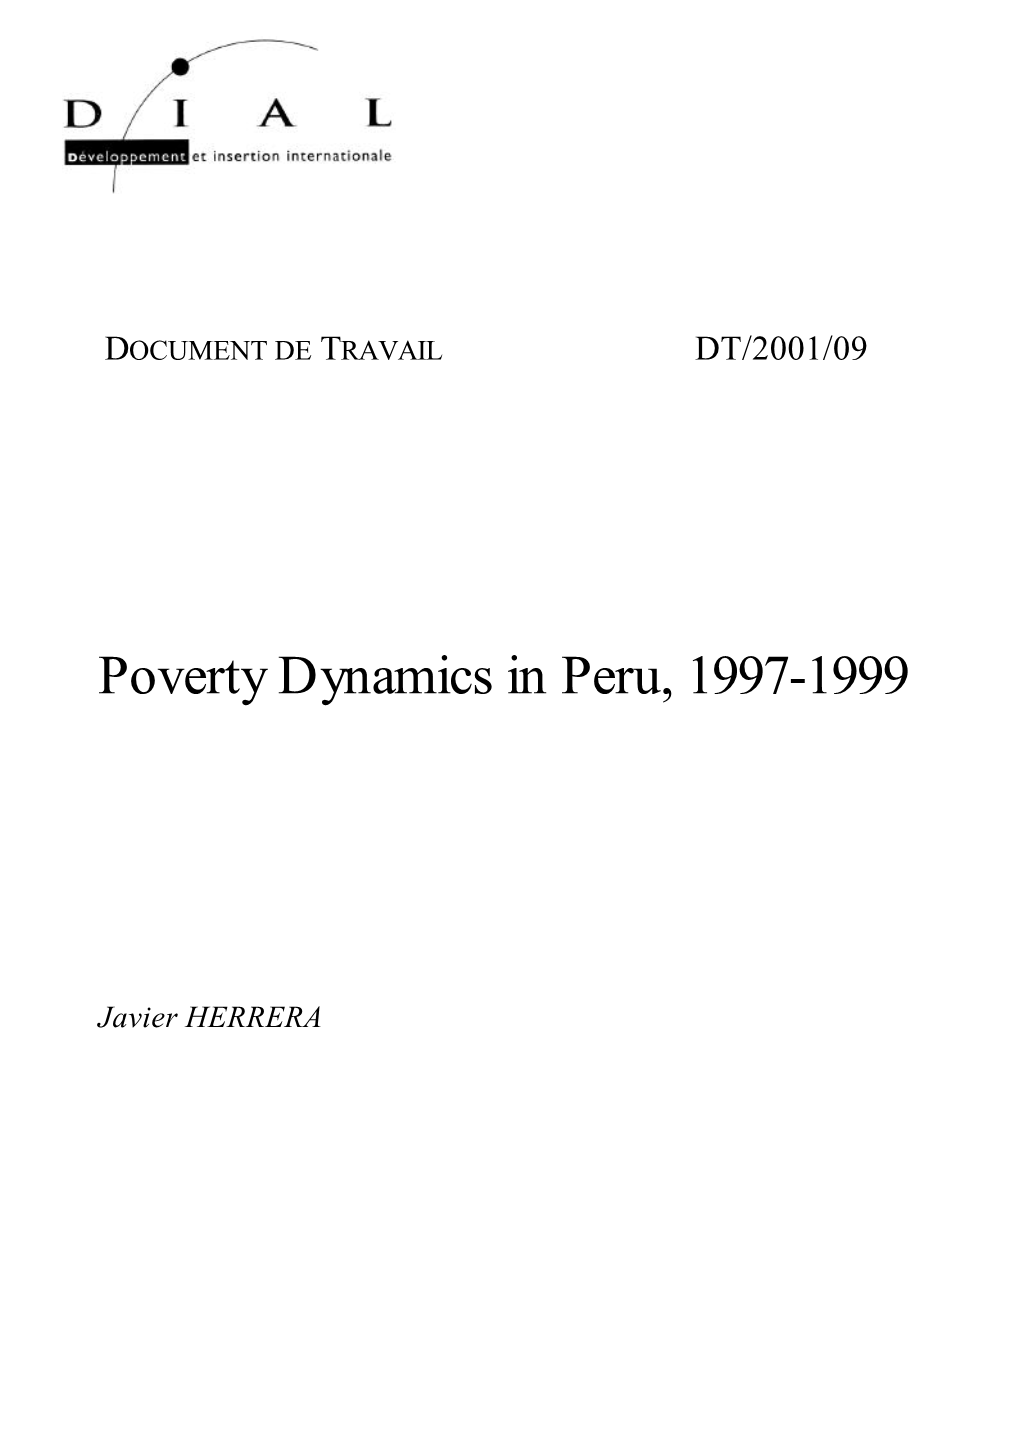 Poverty Dynamics in Peru, 1997-1999